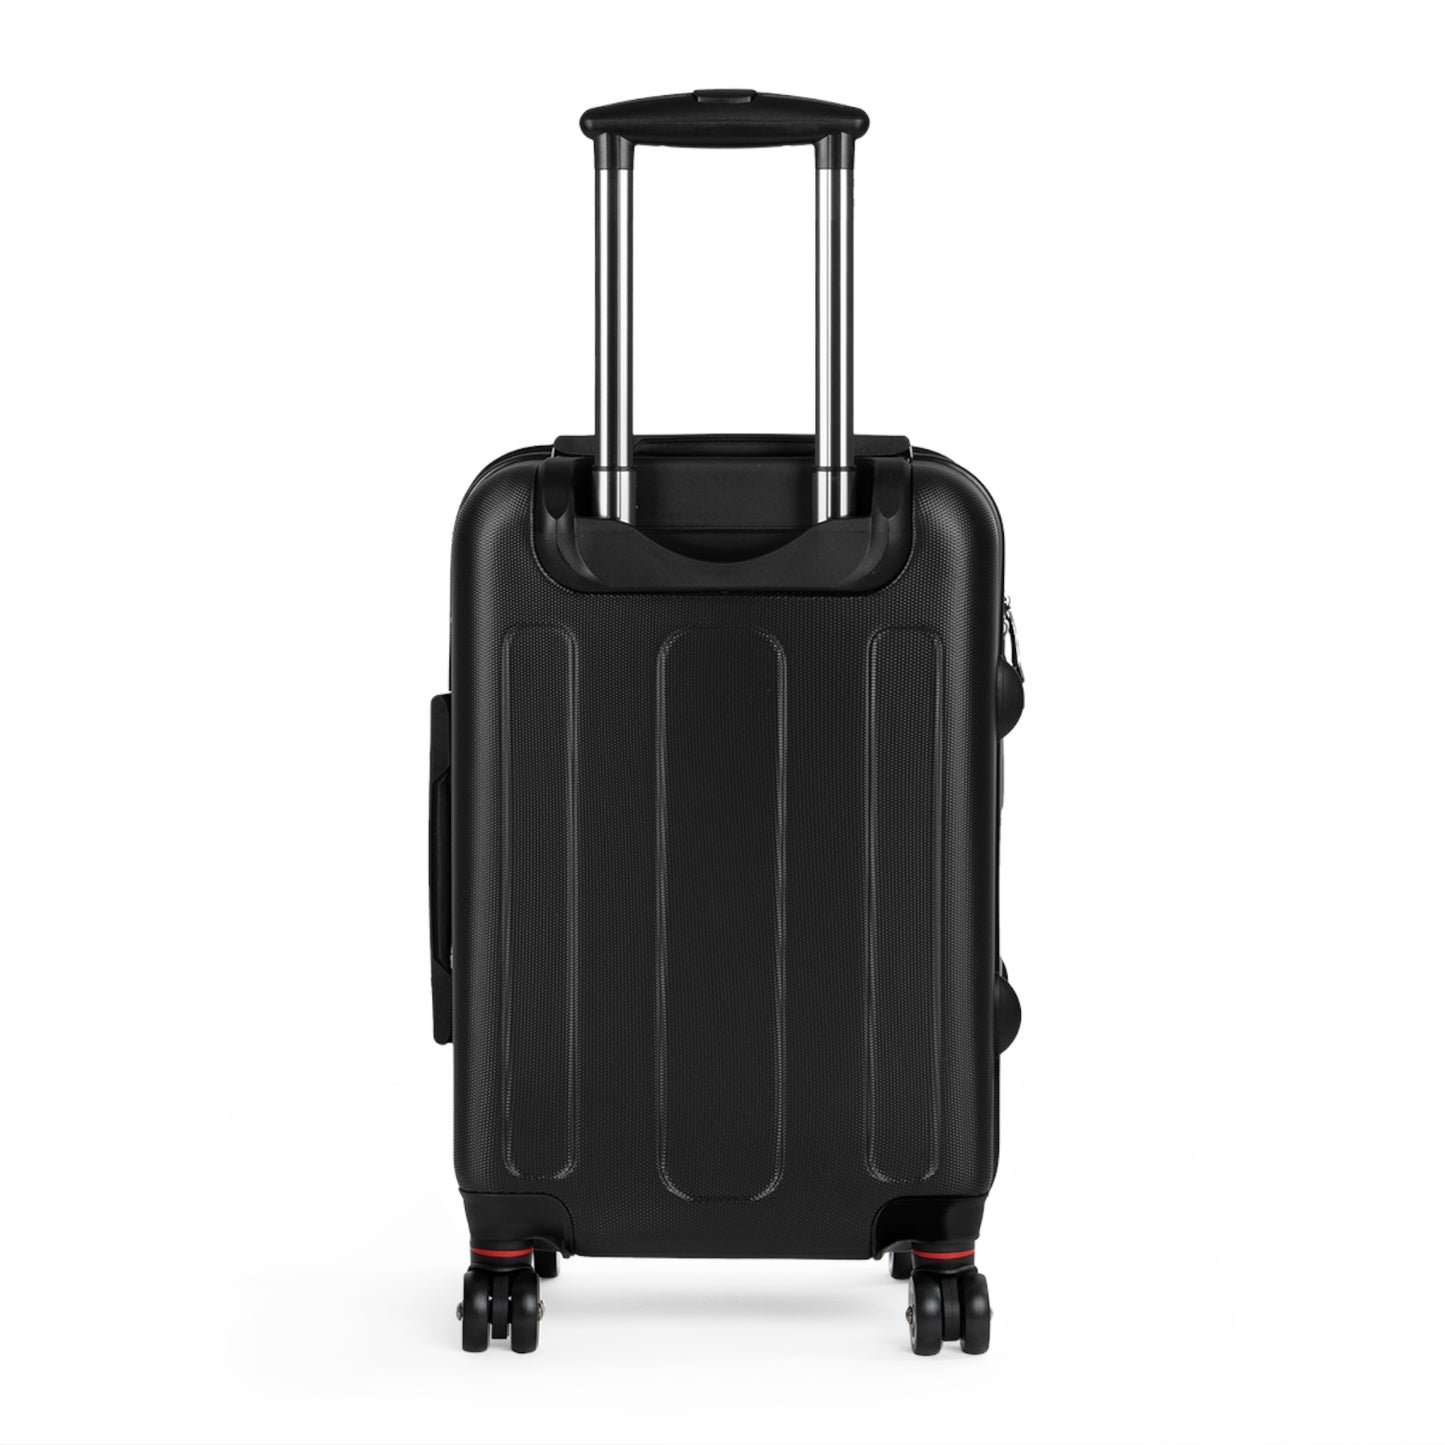 Cappadocia Skies Luggage | Turkey | Travel Luggage | Christmas vacation | Unique Christmas gift | Suitcase